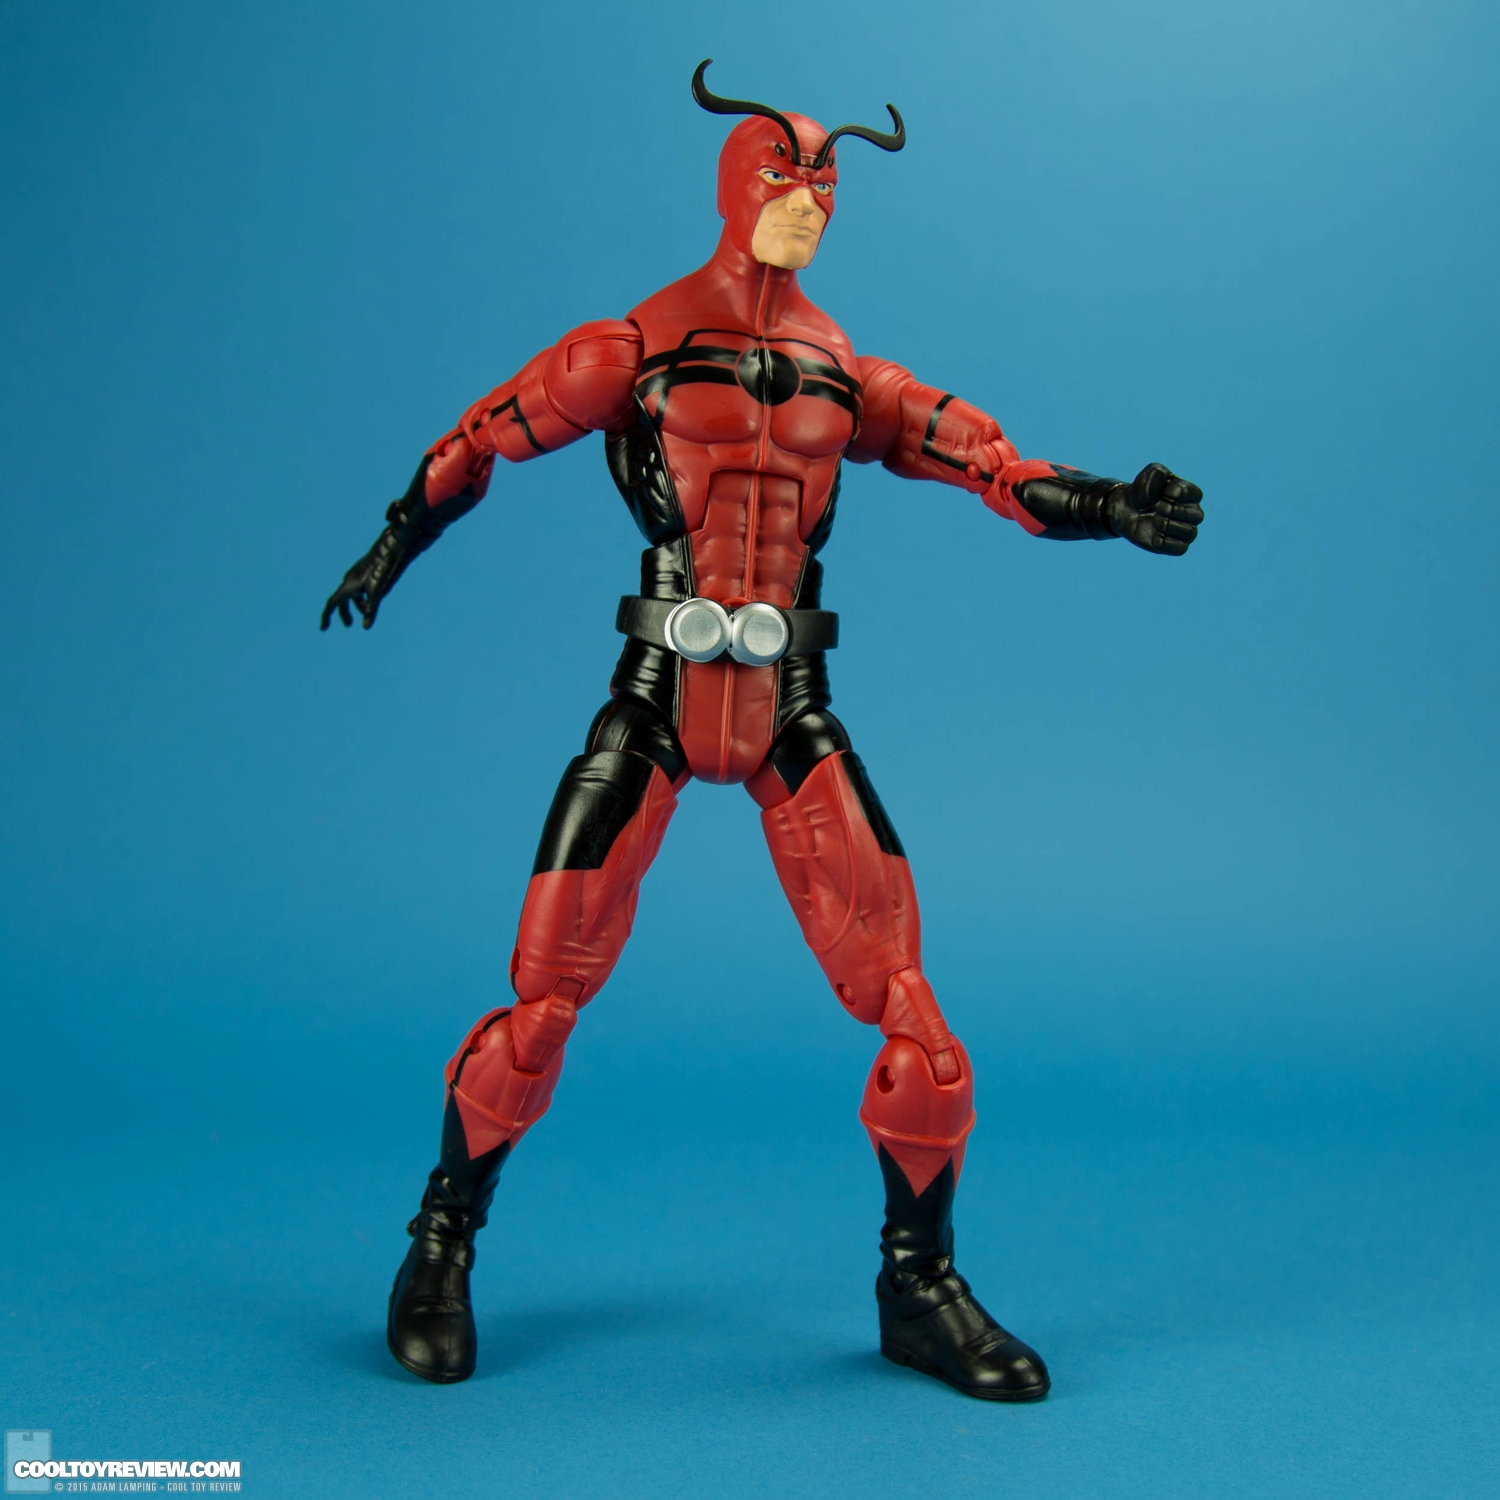 hasbro-deluxe-ant-man-set-san-diego-comic-con-2015-exclusive-002.jpg